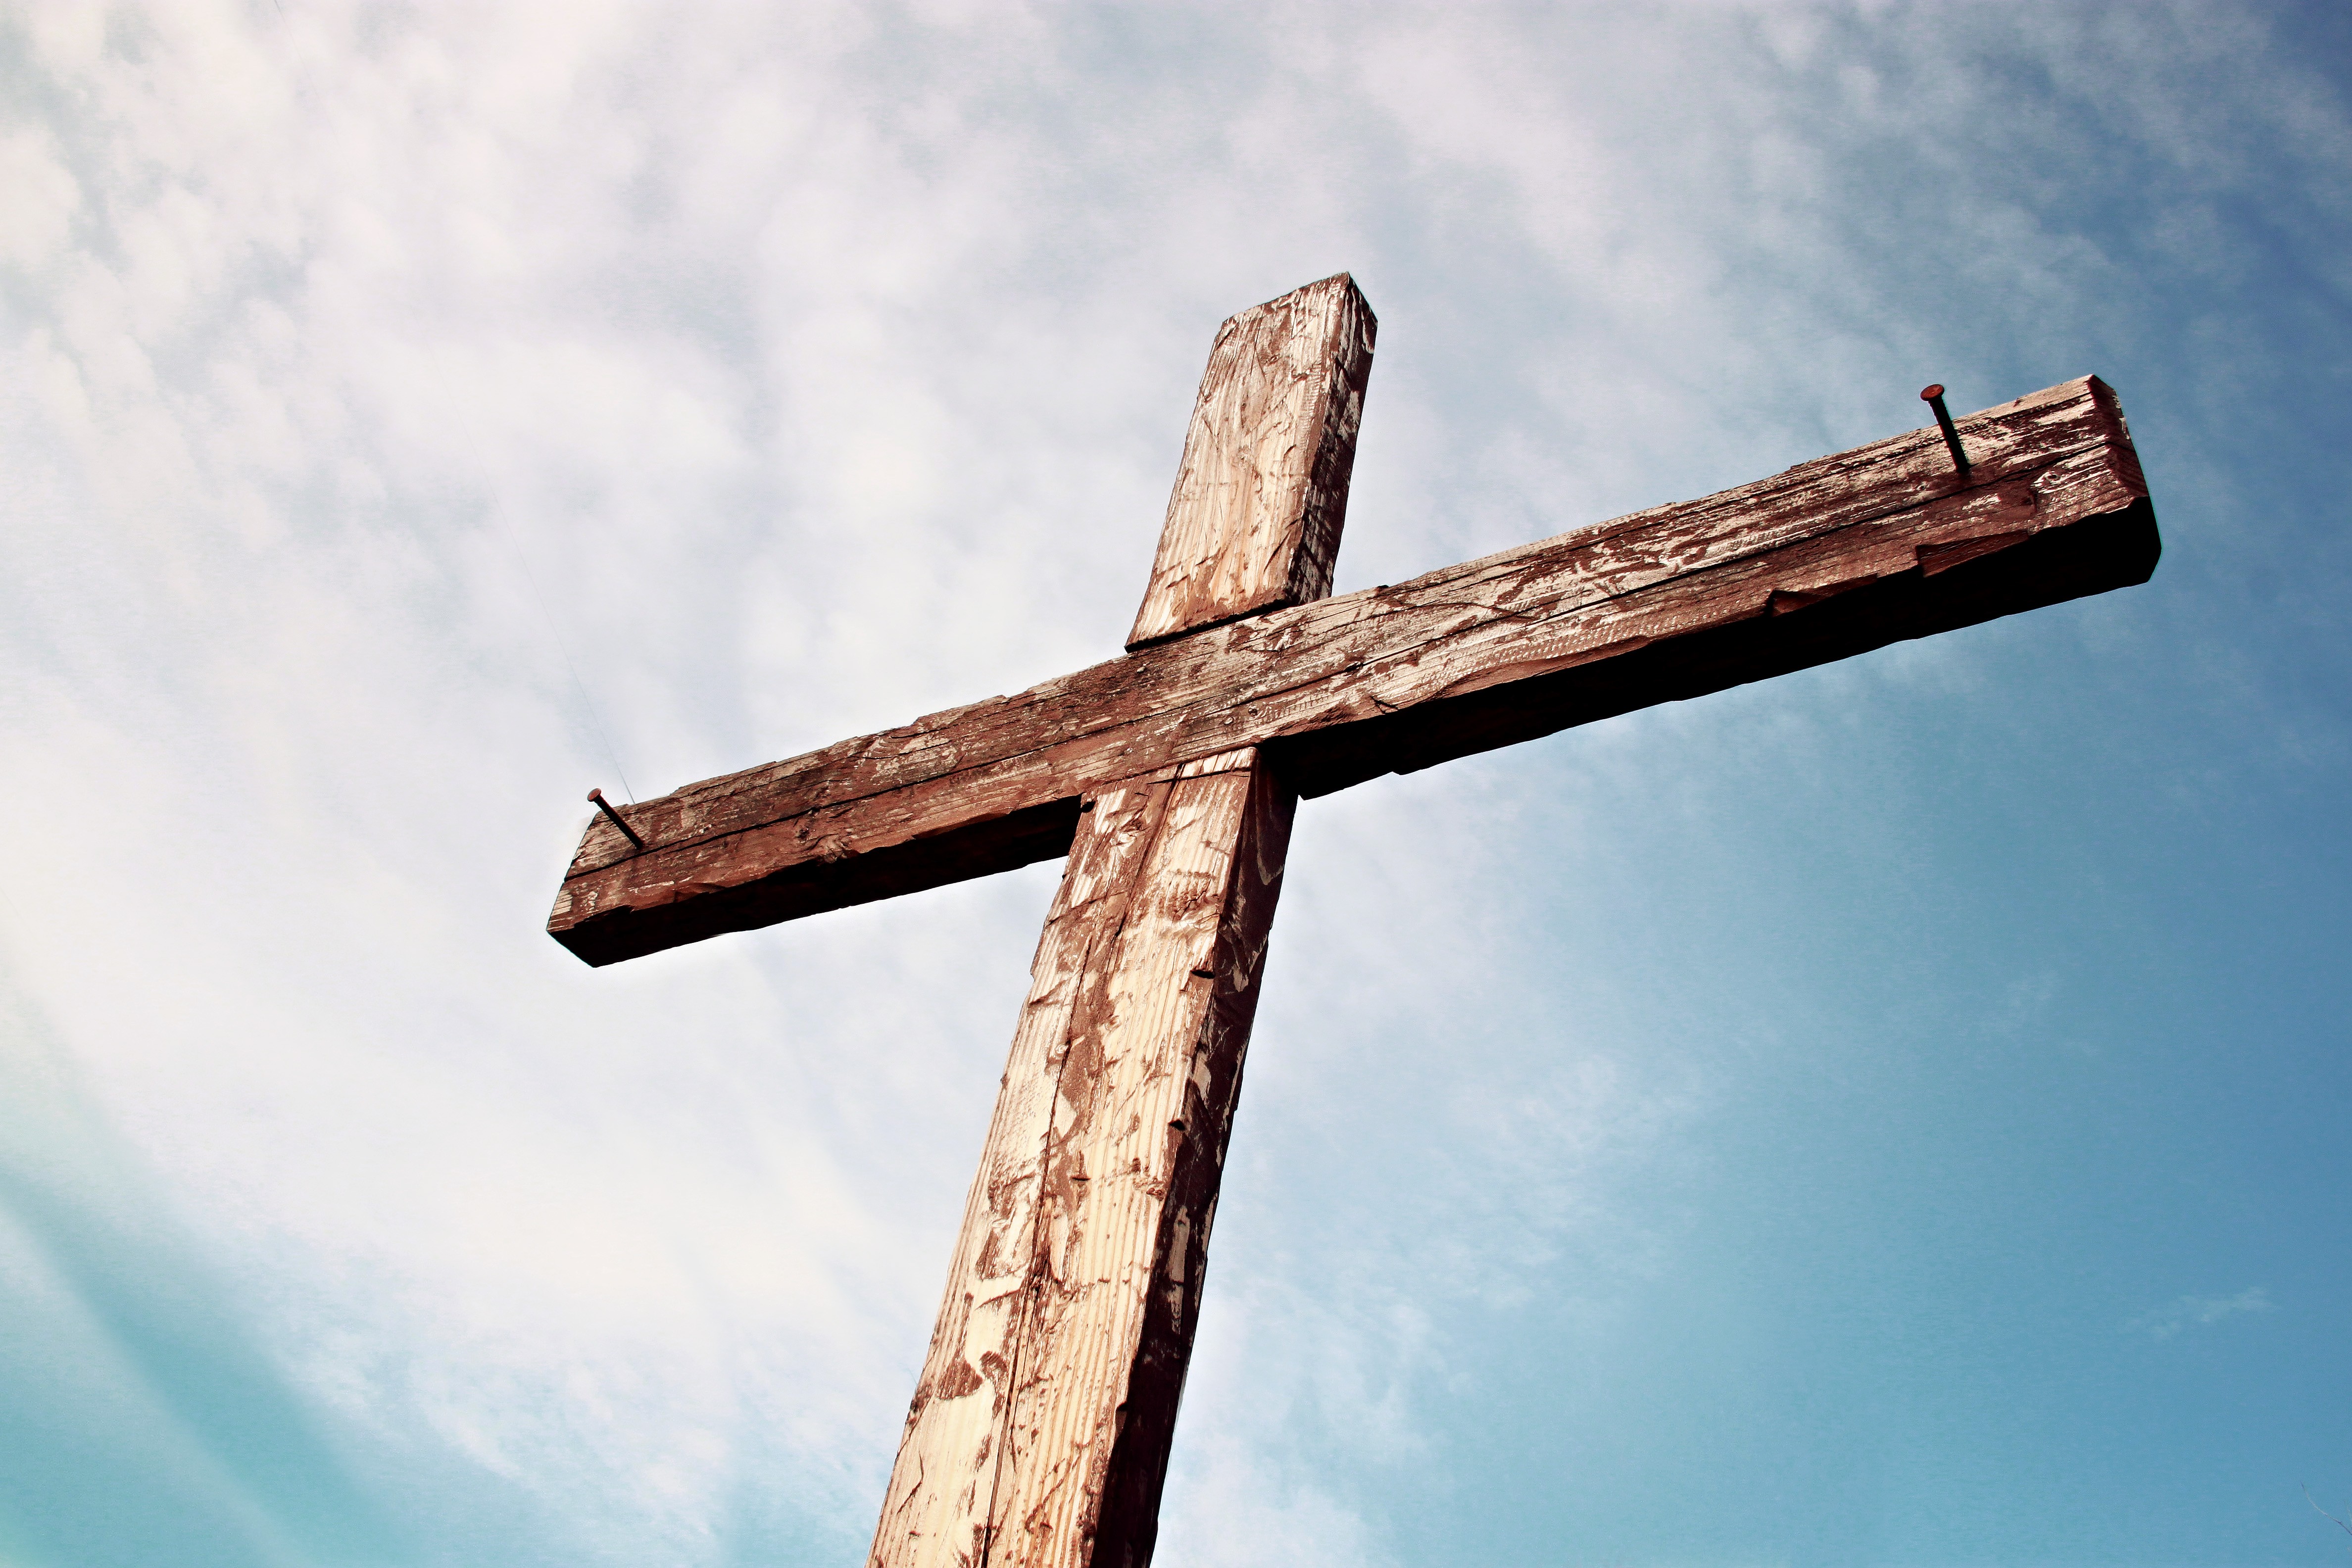 An old, rugged Christian cross set against a cloudy blue sky.